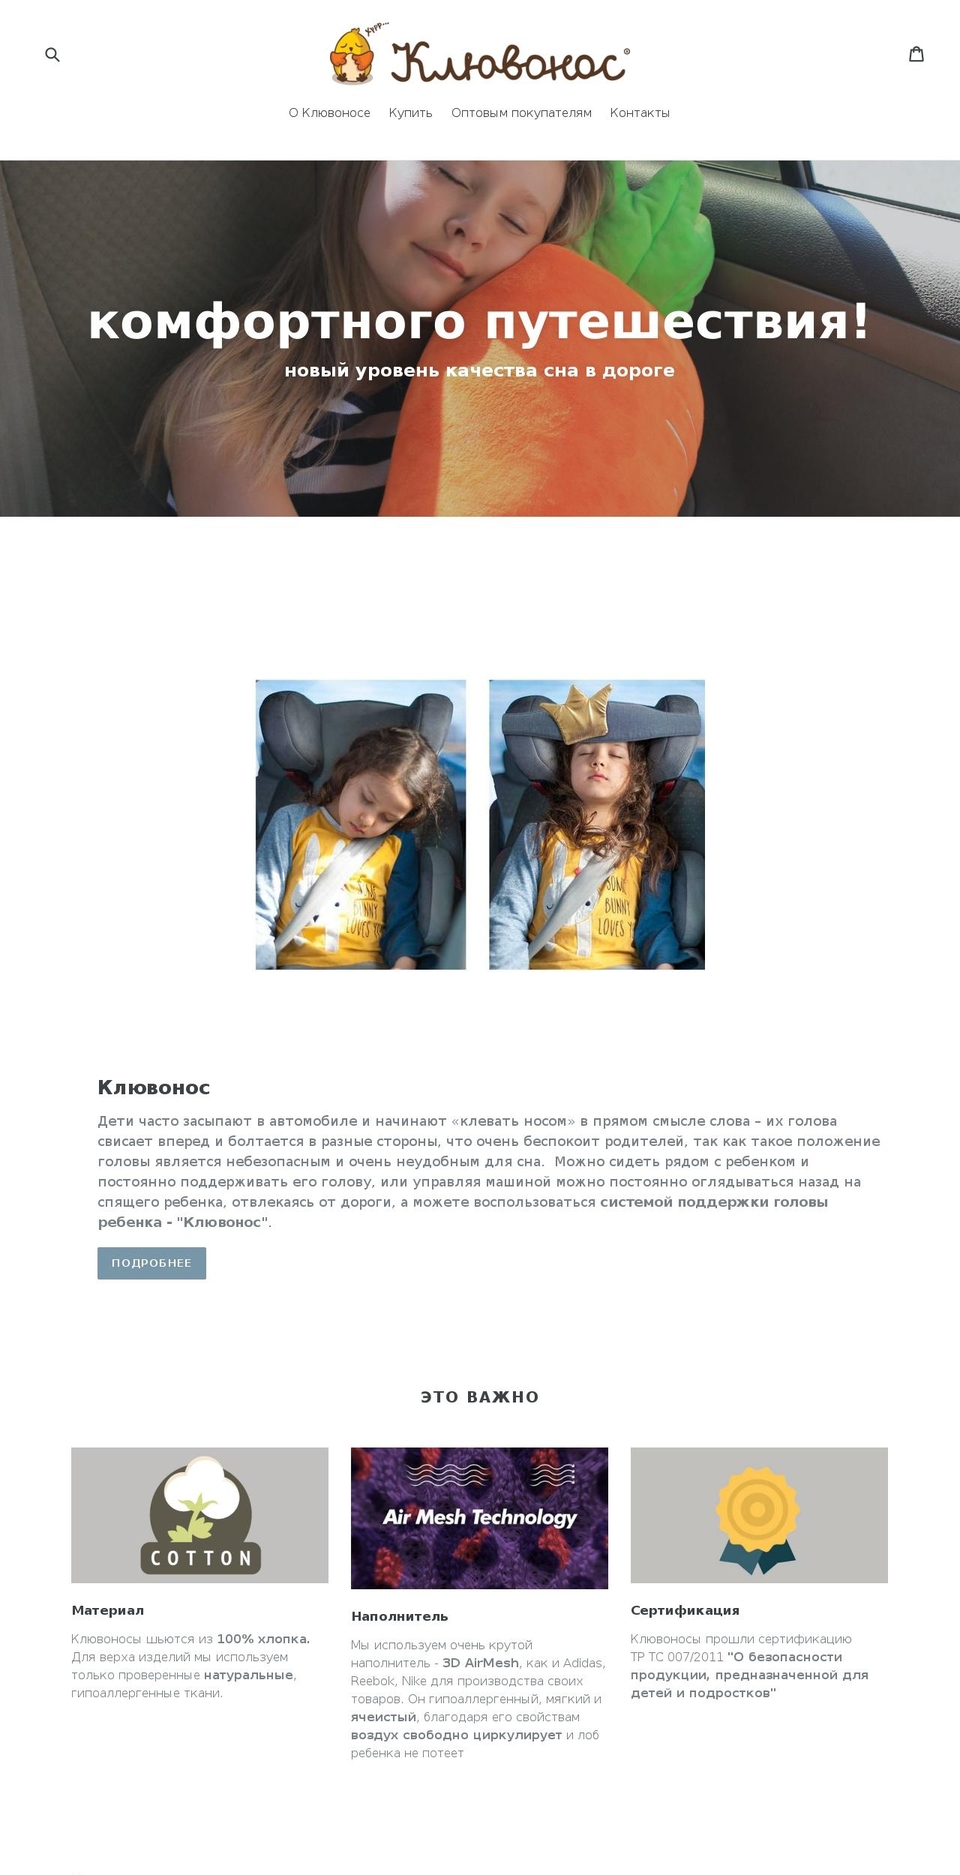 kluvonos.ru shopify website screenshot